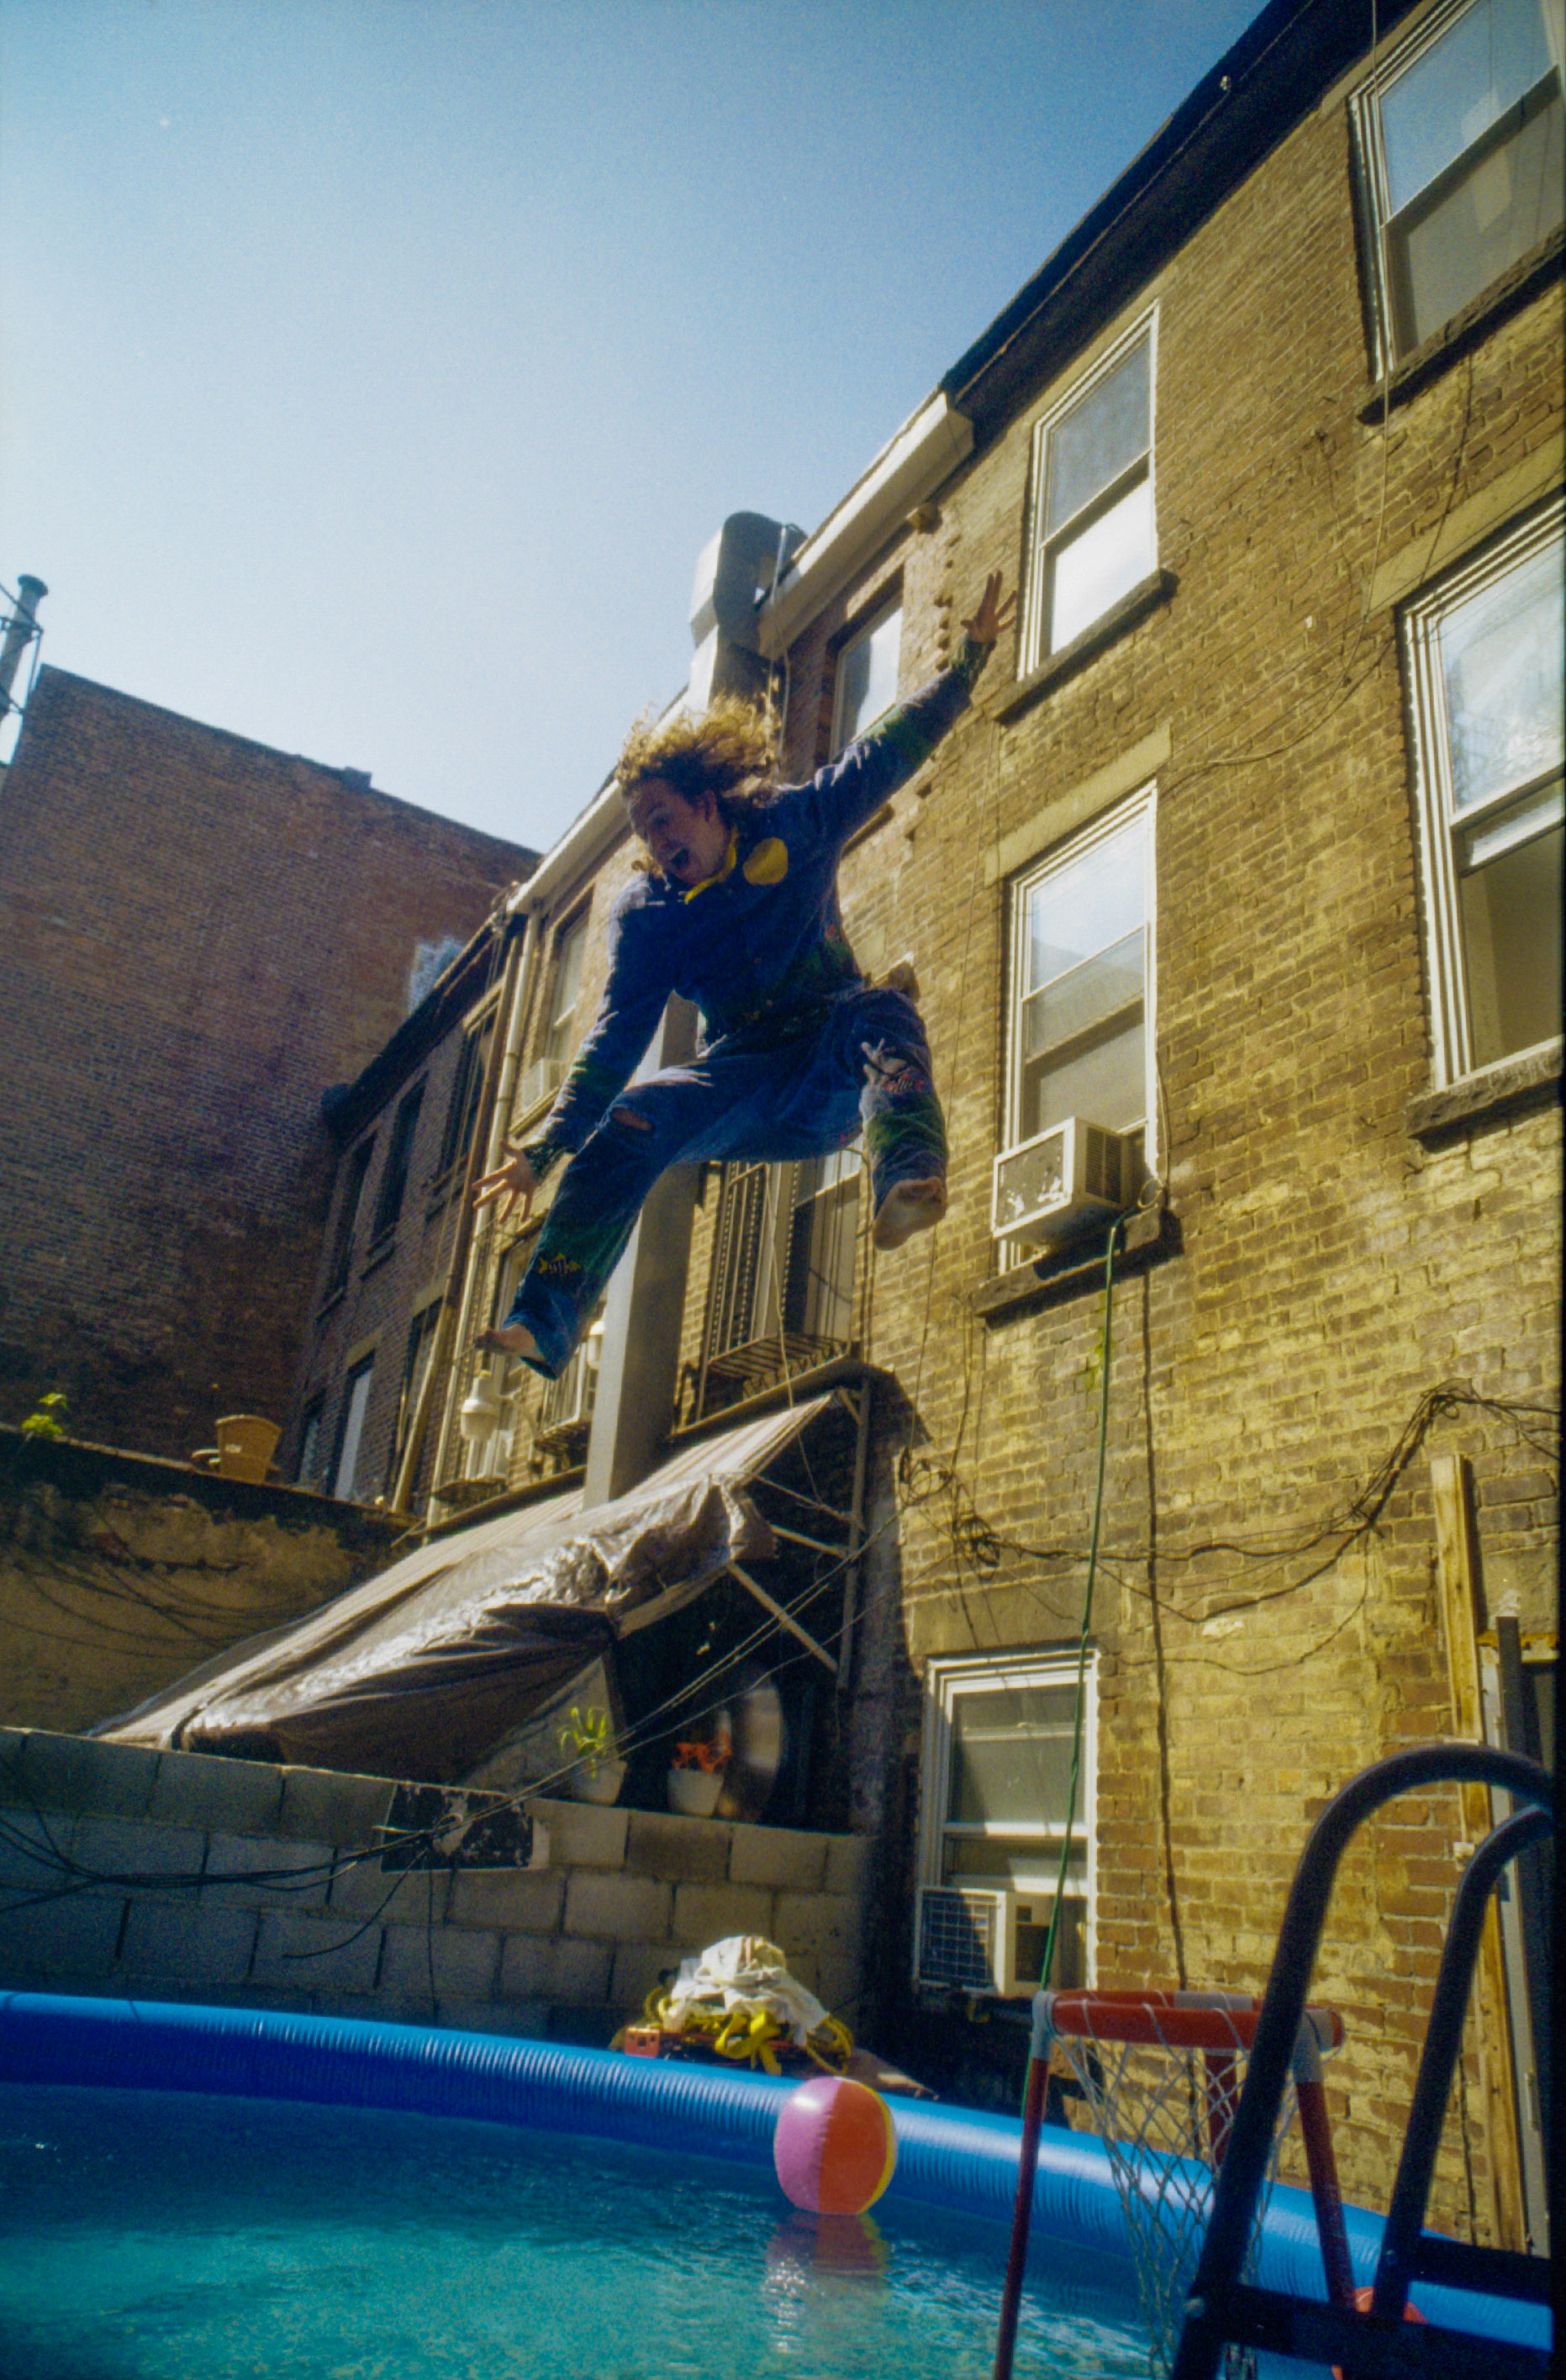 KidSuper's Colm Dillane is Brooklyn's most enigmatic streetwear